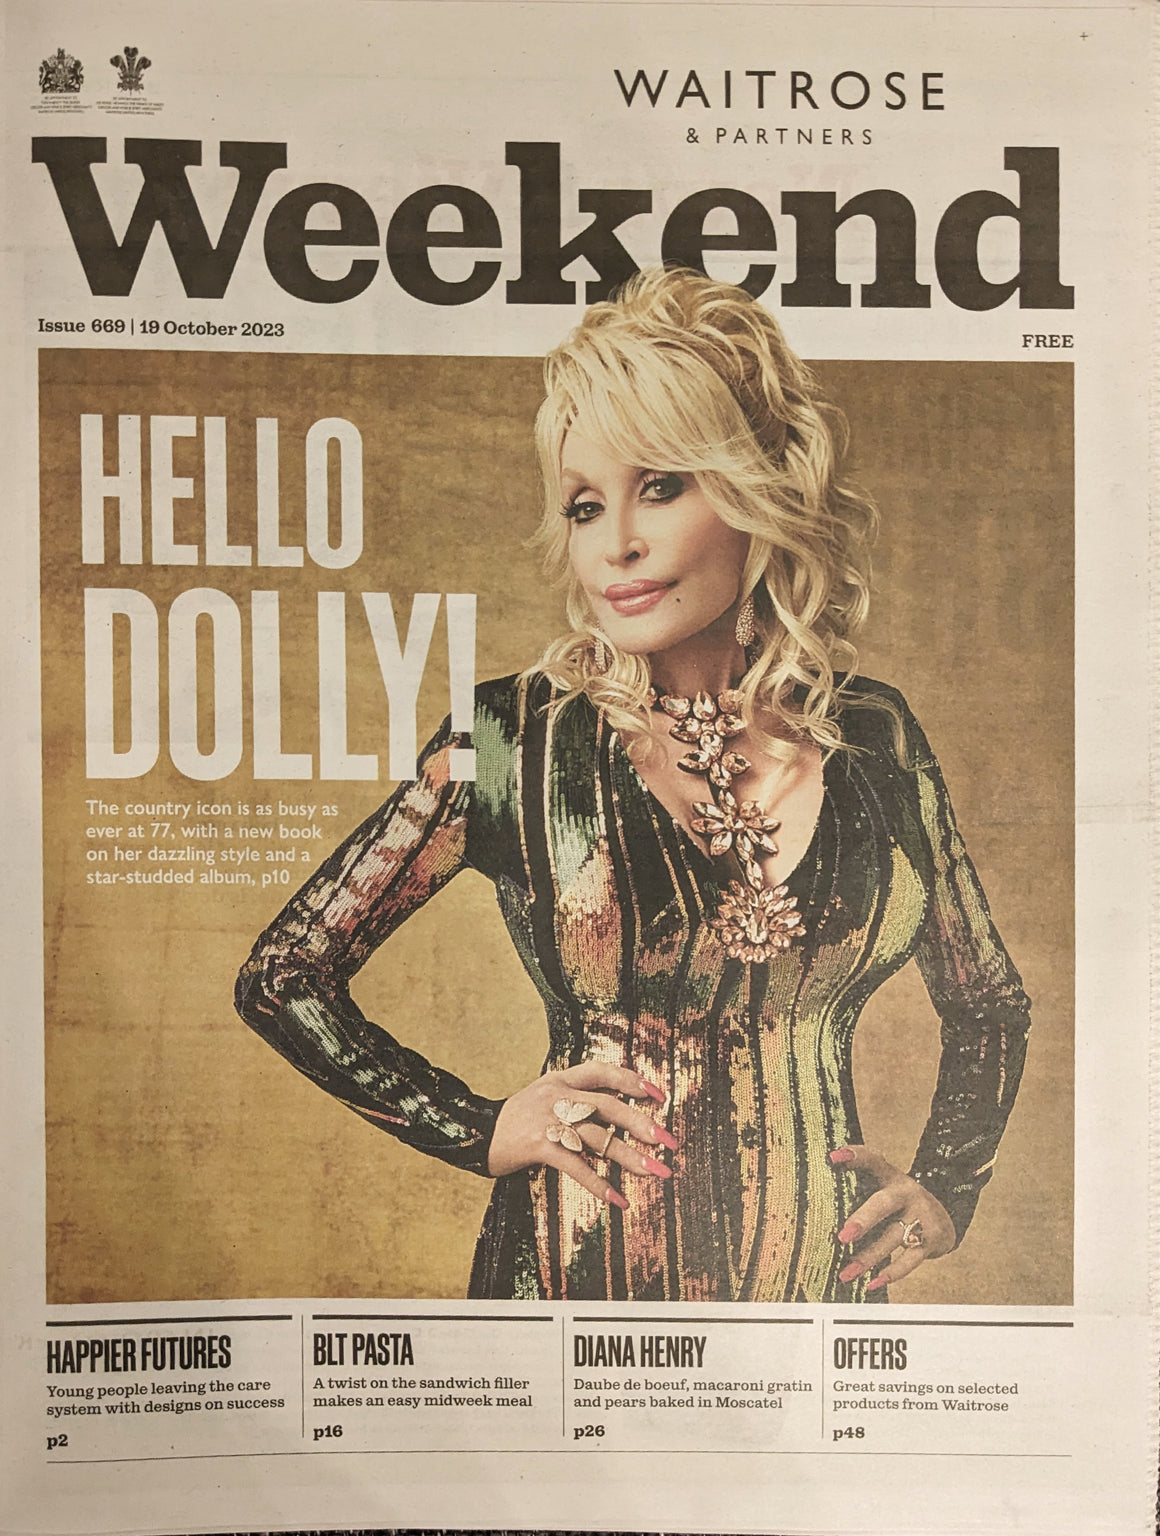 Waitrose Weekend Supplement October 2023: Dolly Parton